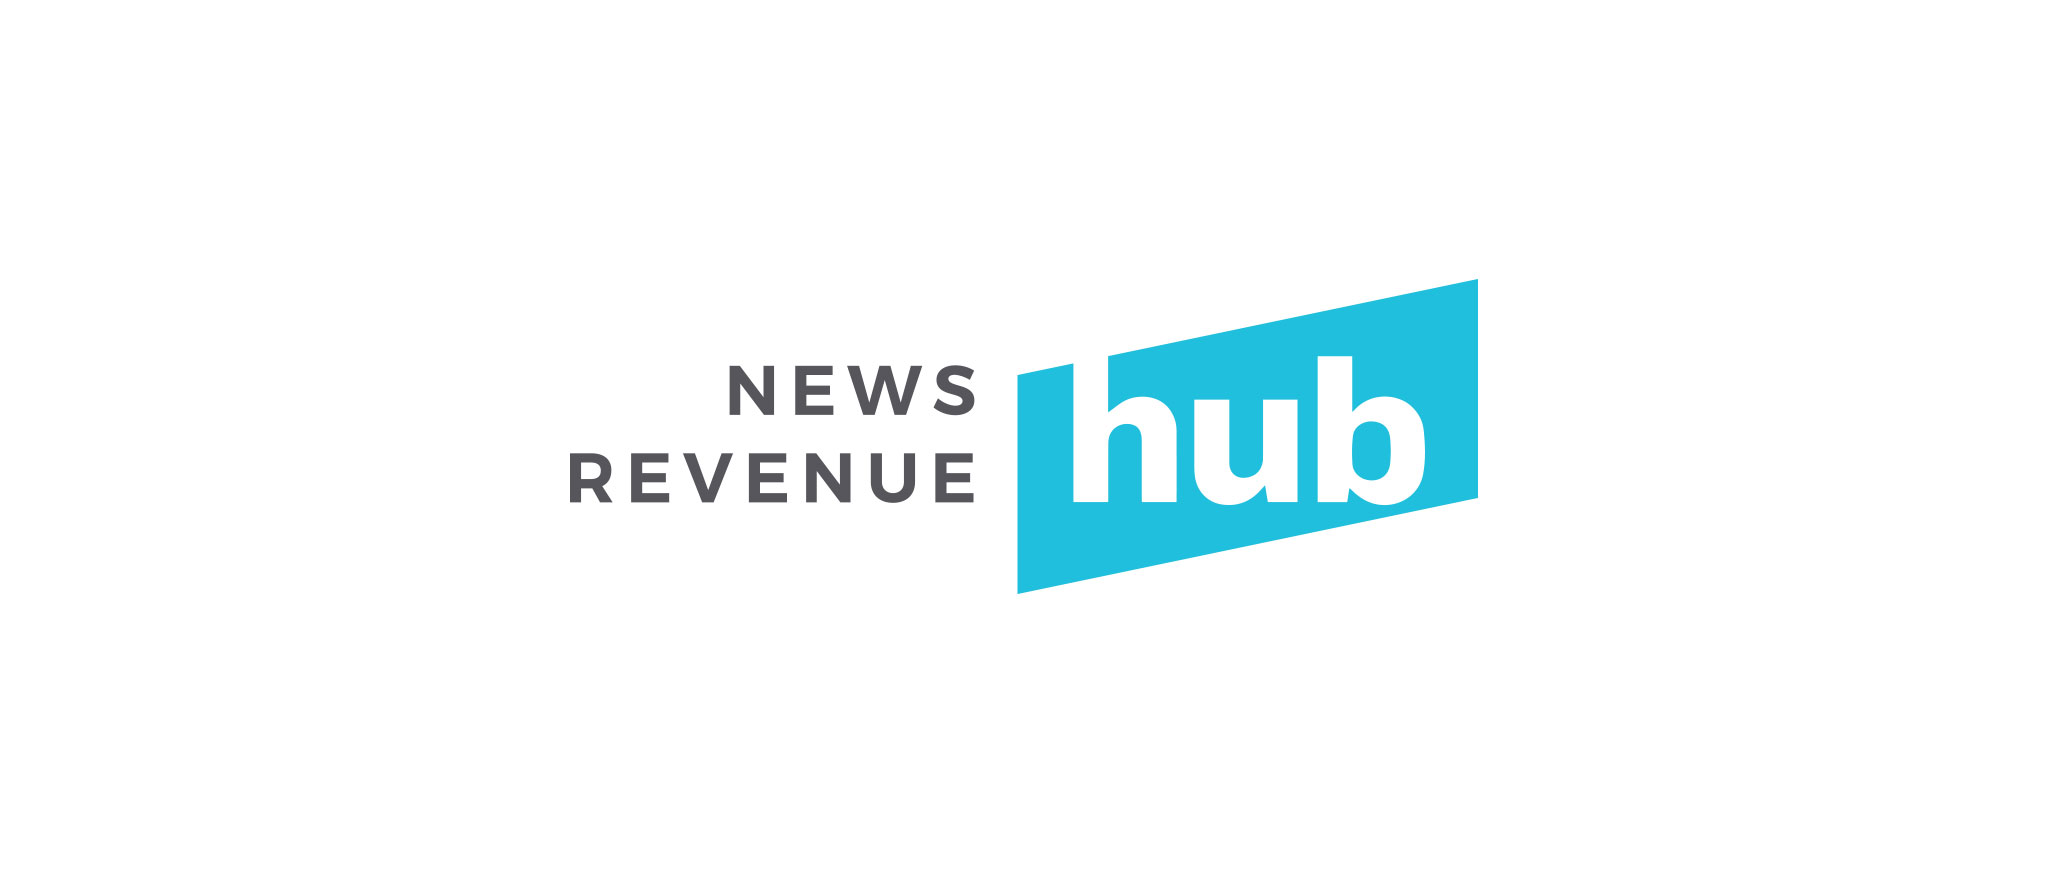 News Revenue Hub logo design by Ashley Lewis